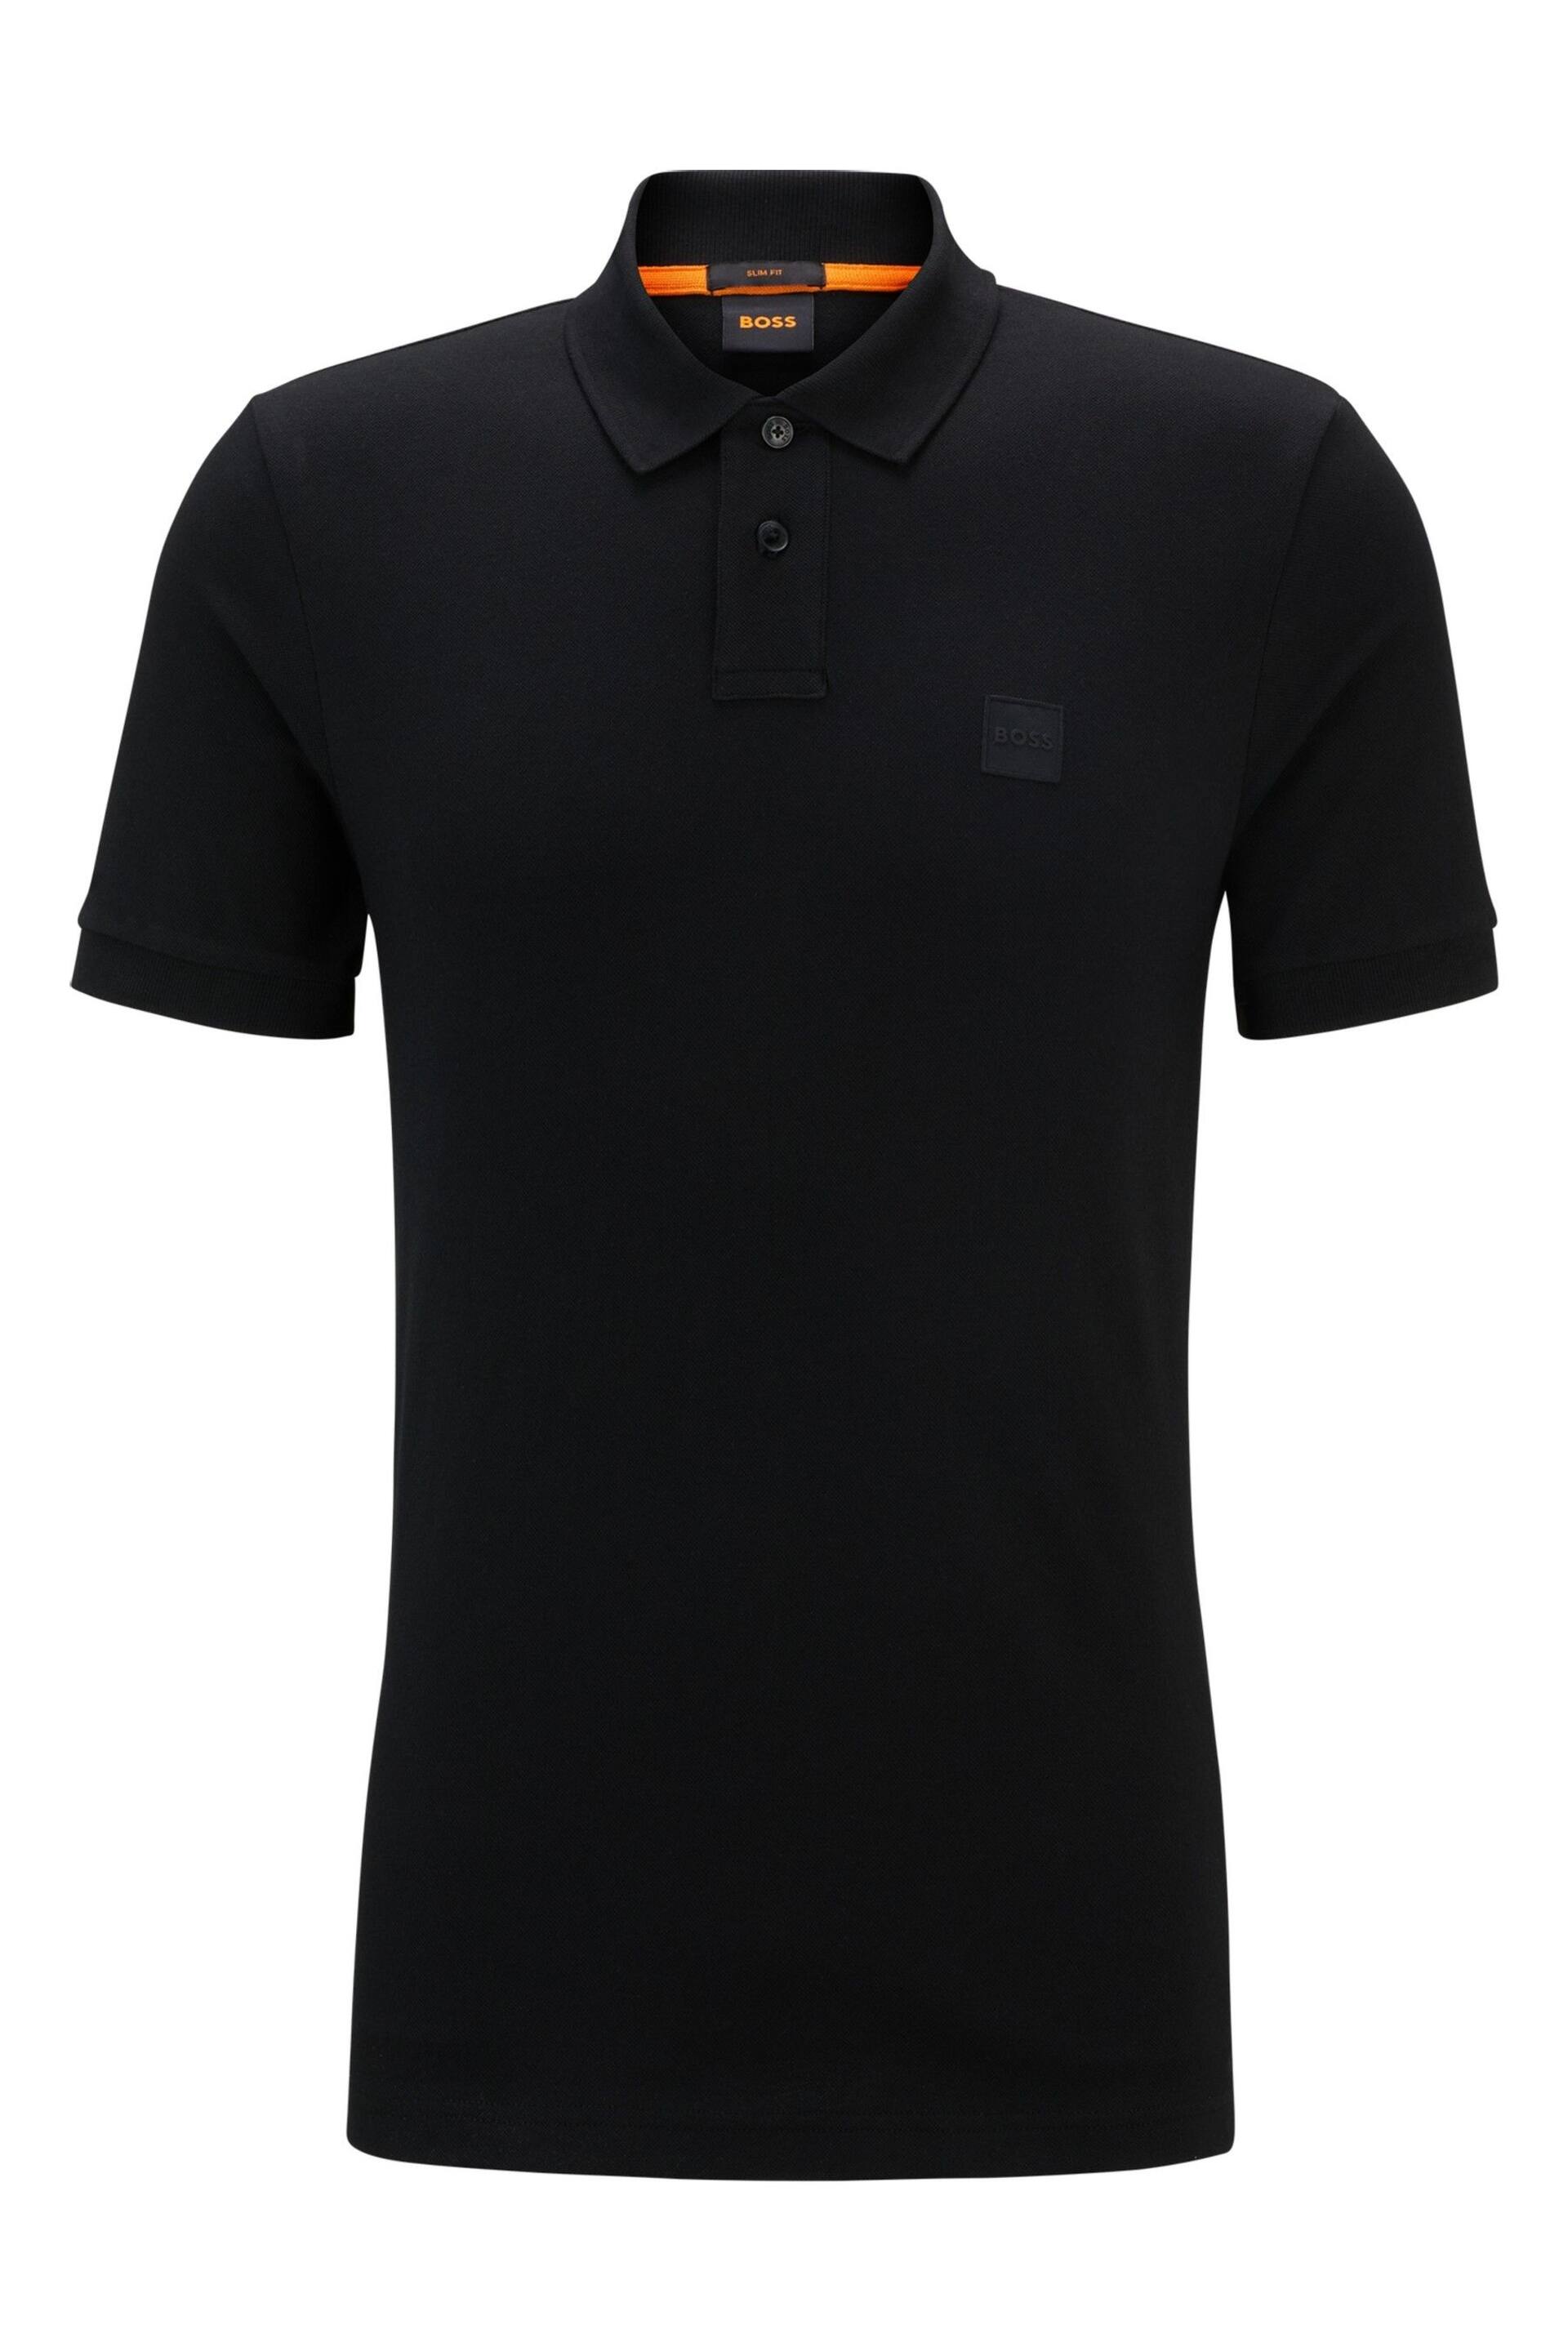 BOSS Black Slim-Fit Logo-Patch Polo Shirt - Image 5 of 5